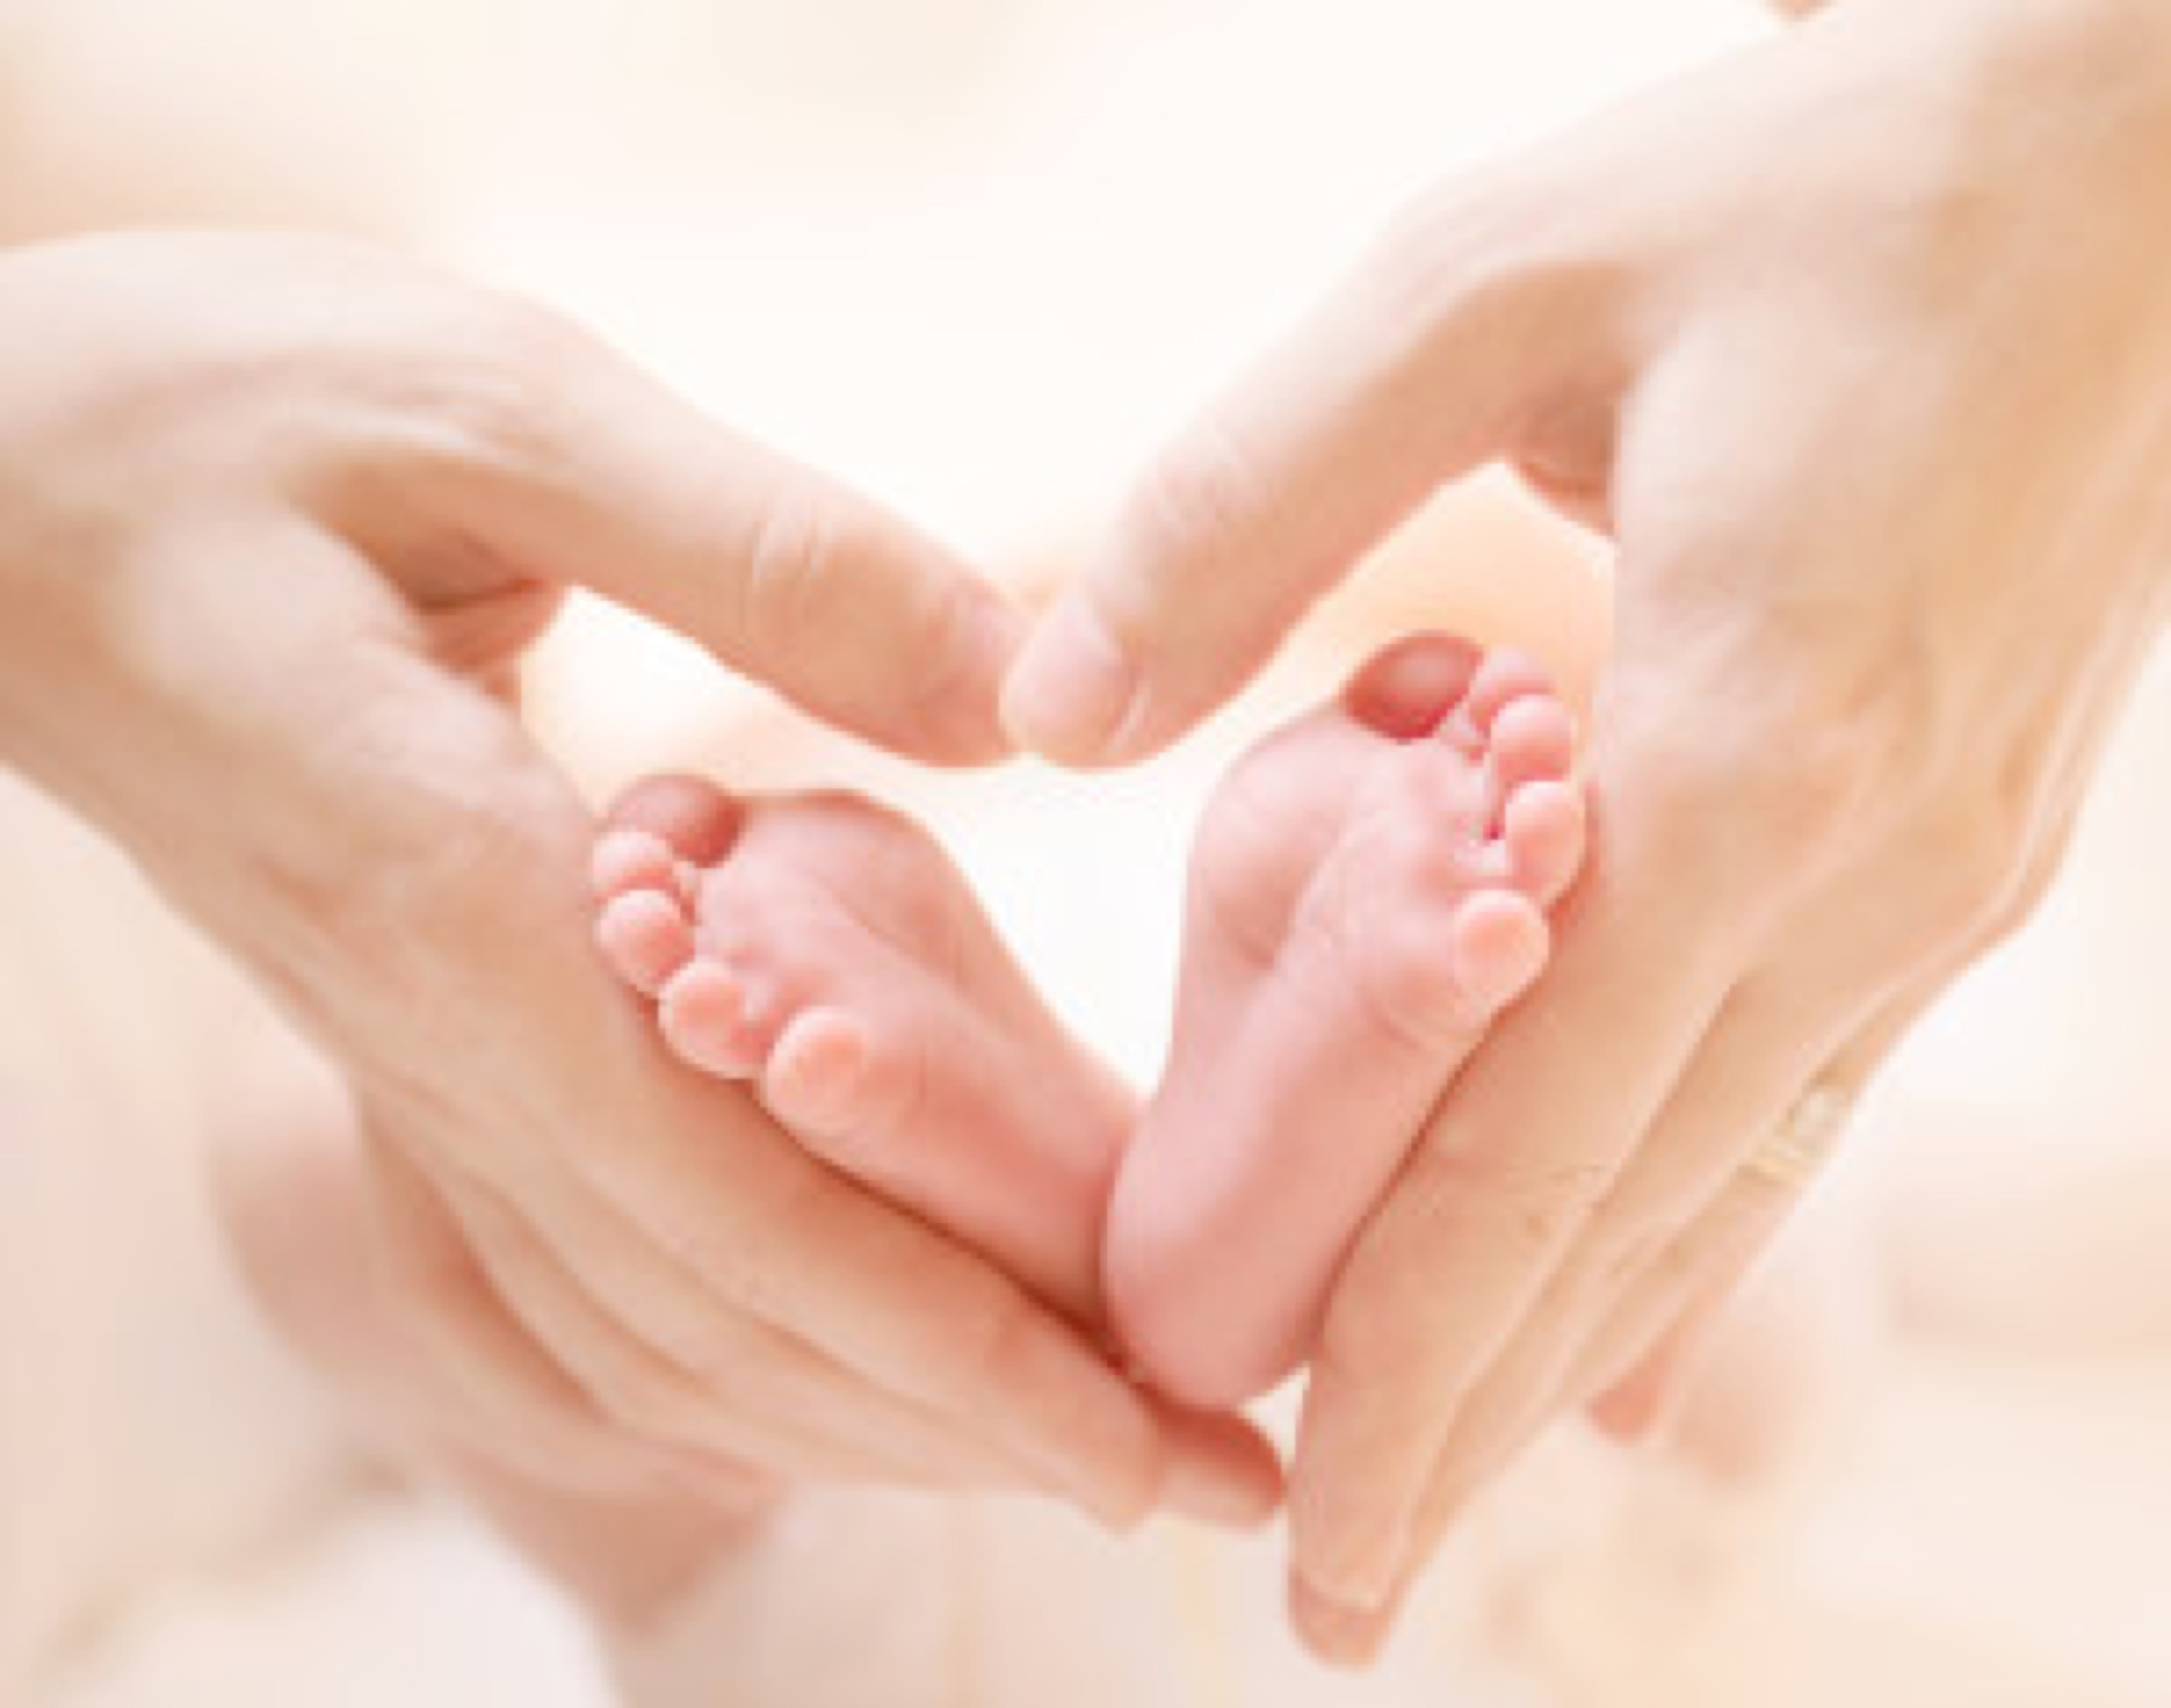 Tiny Newborn Baby's feet on female Heart Shaped hands closeup